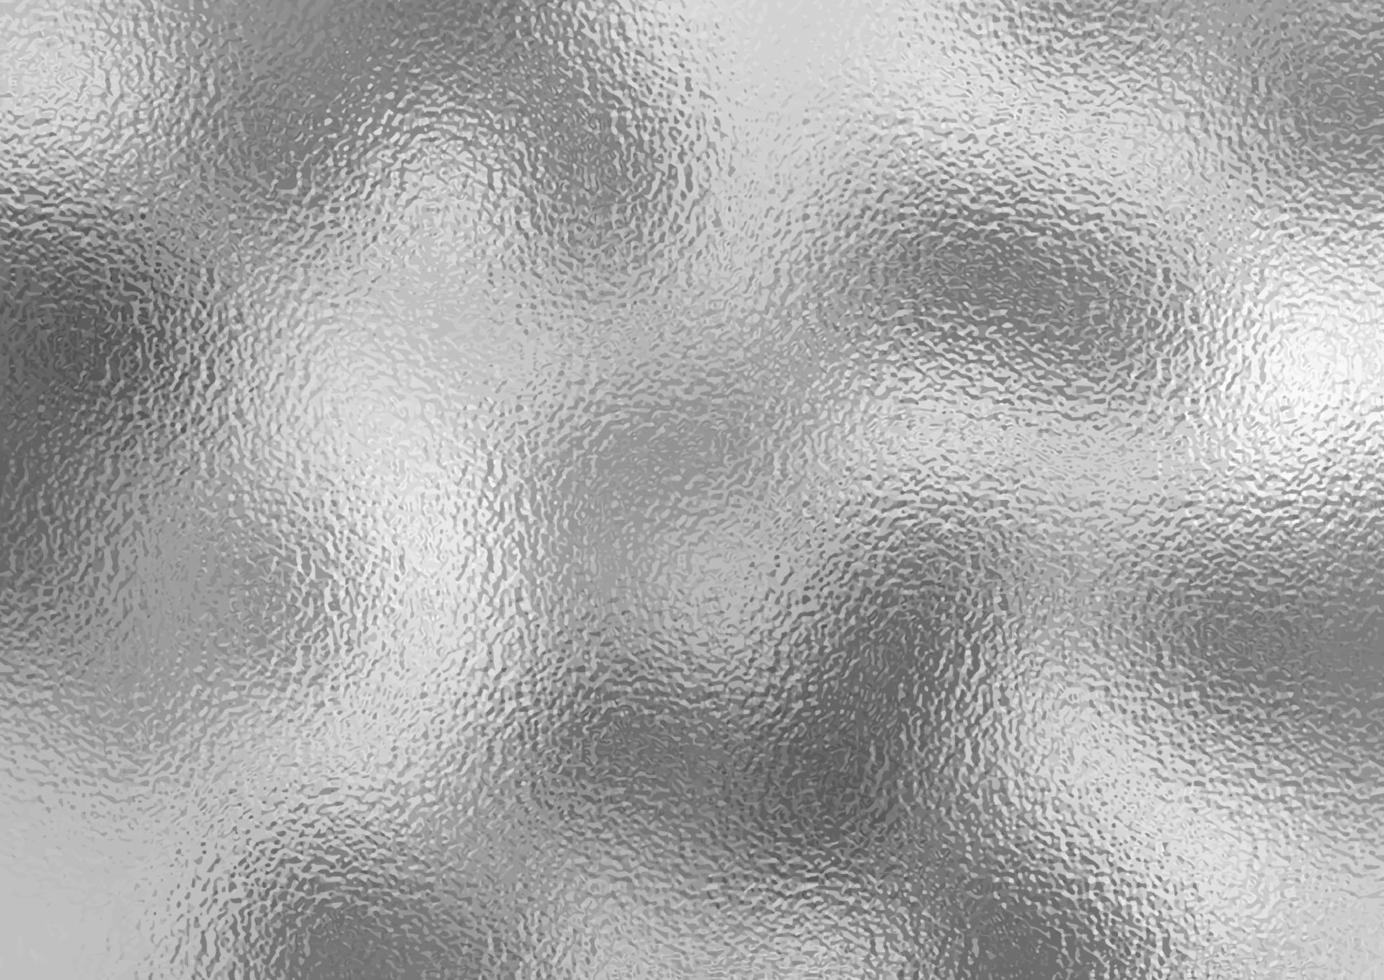 Silver foil metallic texture background vector